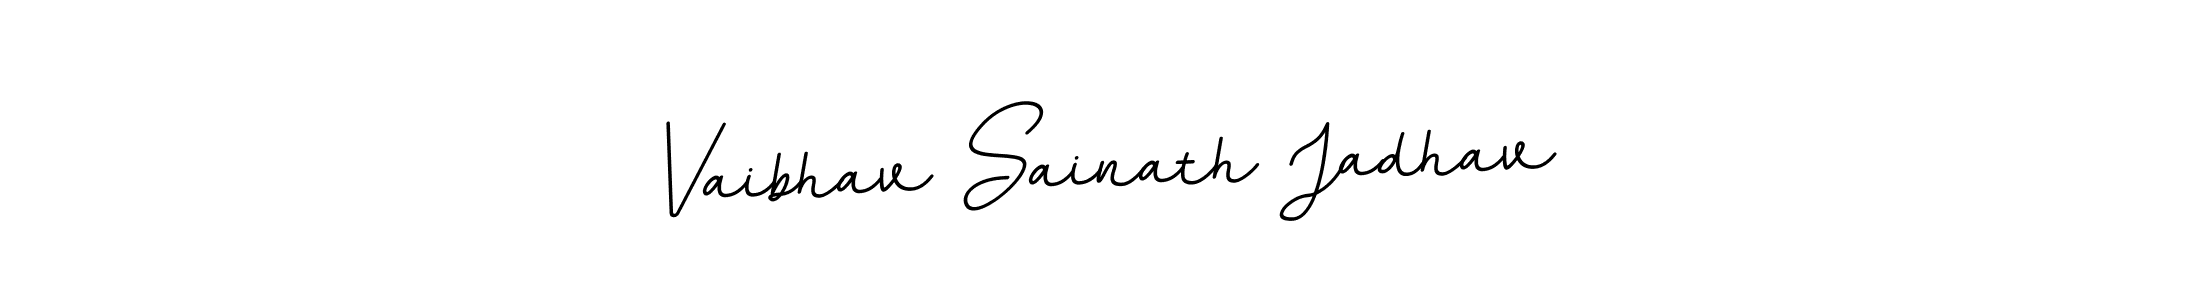 How to Draw Vaibhav Sainath Jadhav signature style? BallpointsItalic-DORy9 is a latest design signature styles for name Vaibhav Sainath Jadhav. Vaibhav Sainath Jadhav signature style 11 images and pictures png